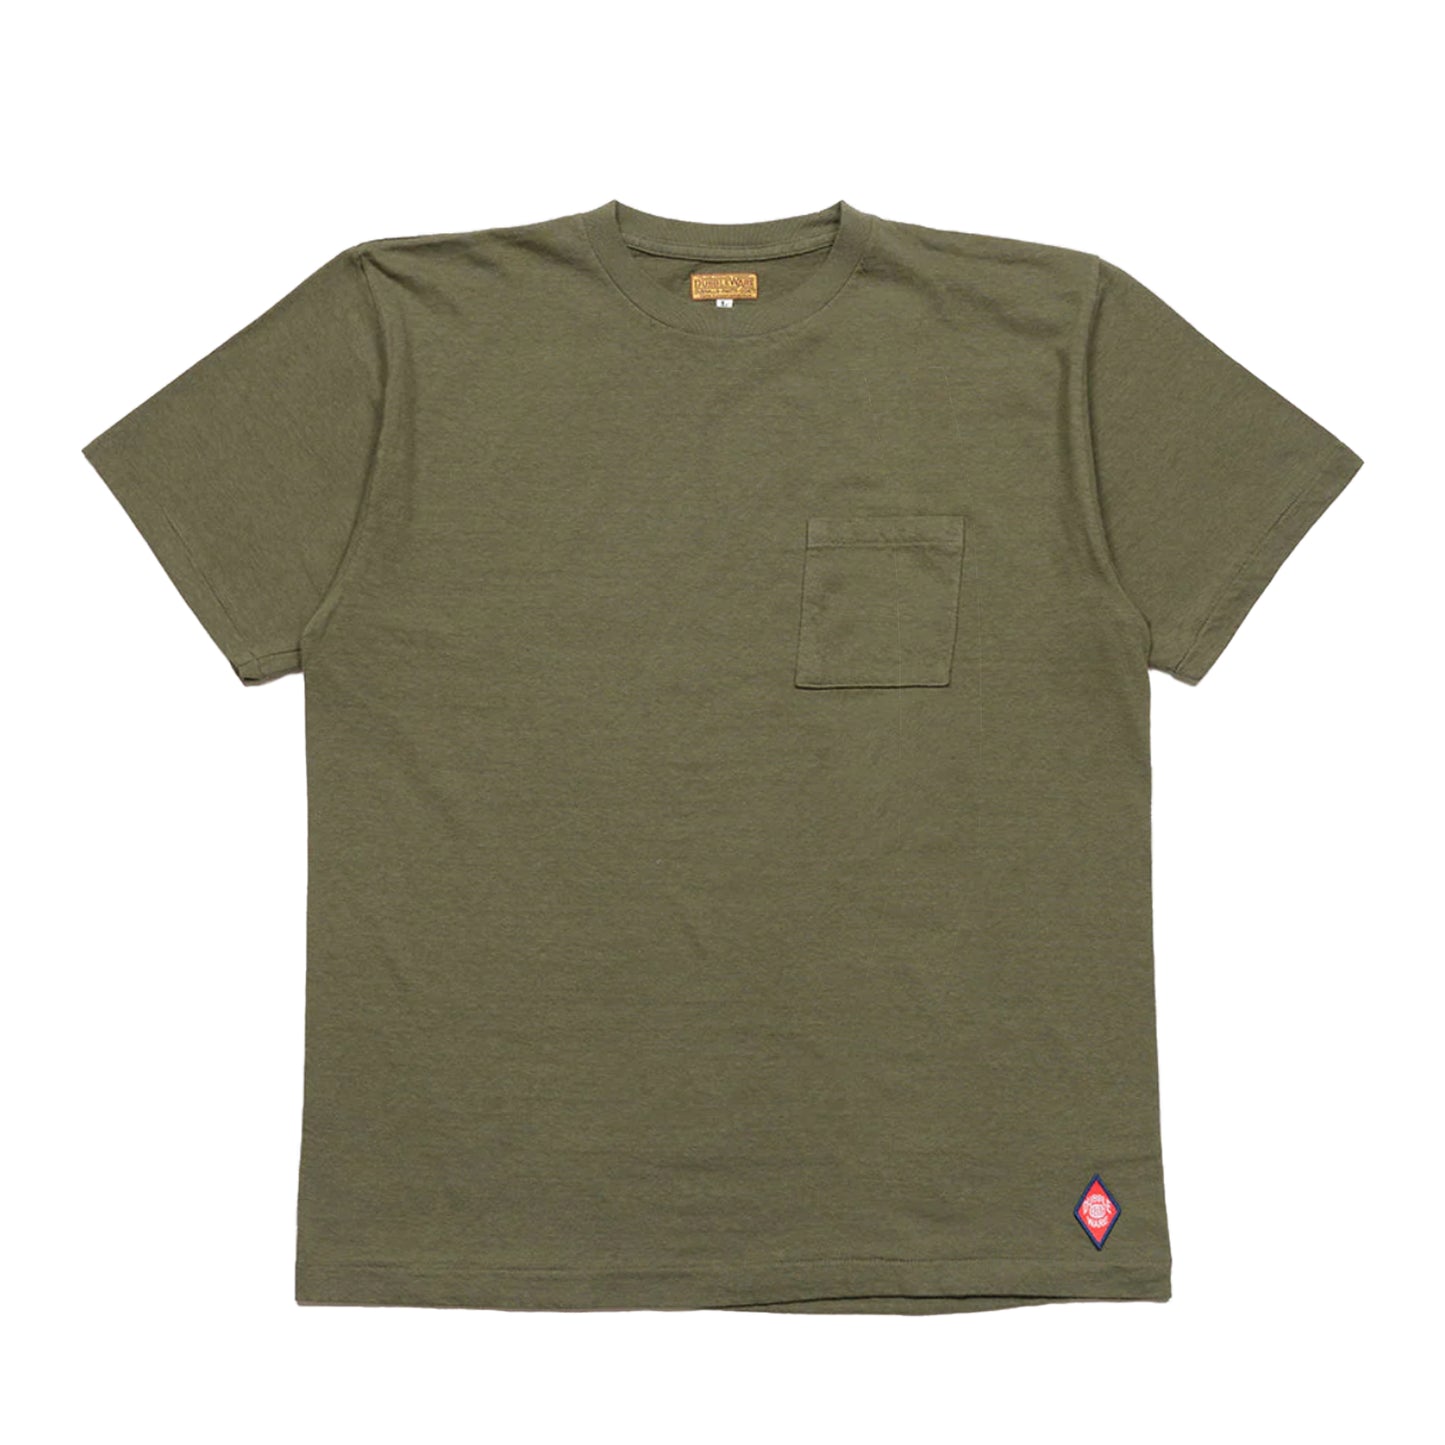 Dubbleware Crew Neck Pocket T-Shirt - Khaki Green - SALE 35% OFF ...